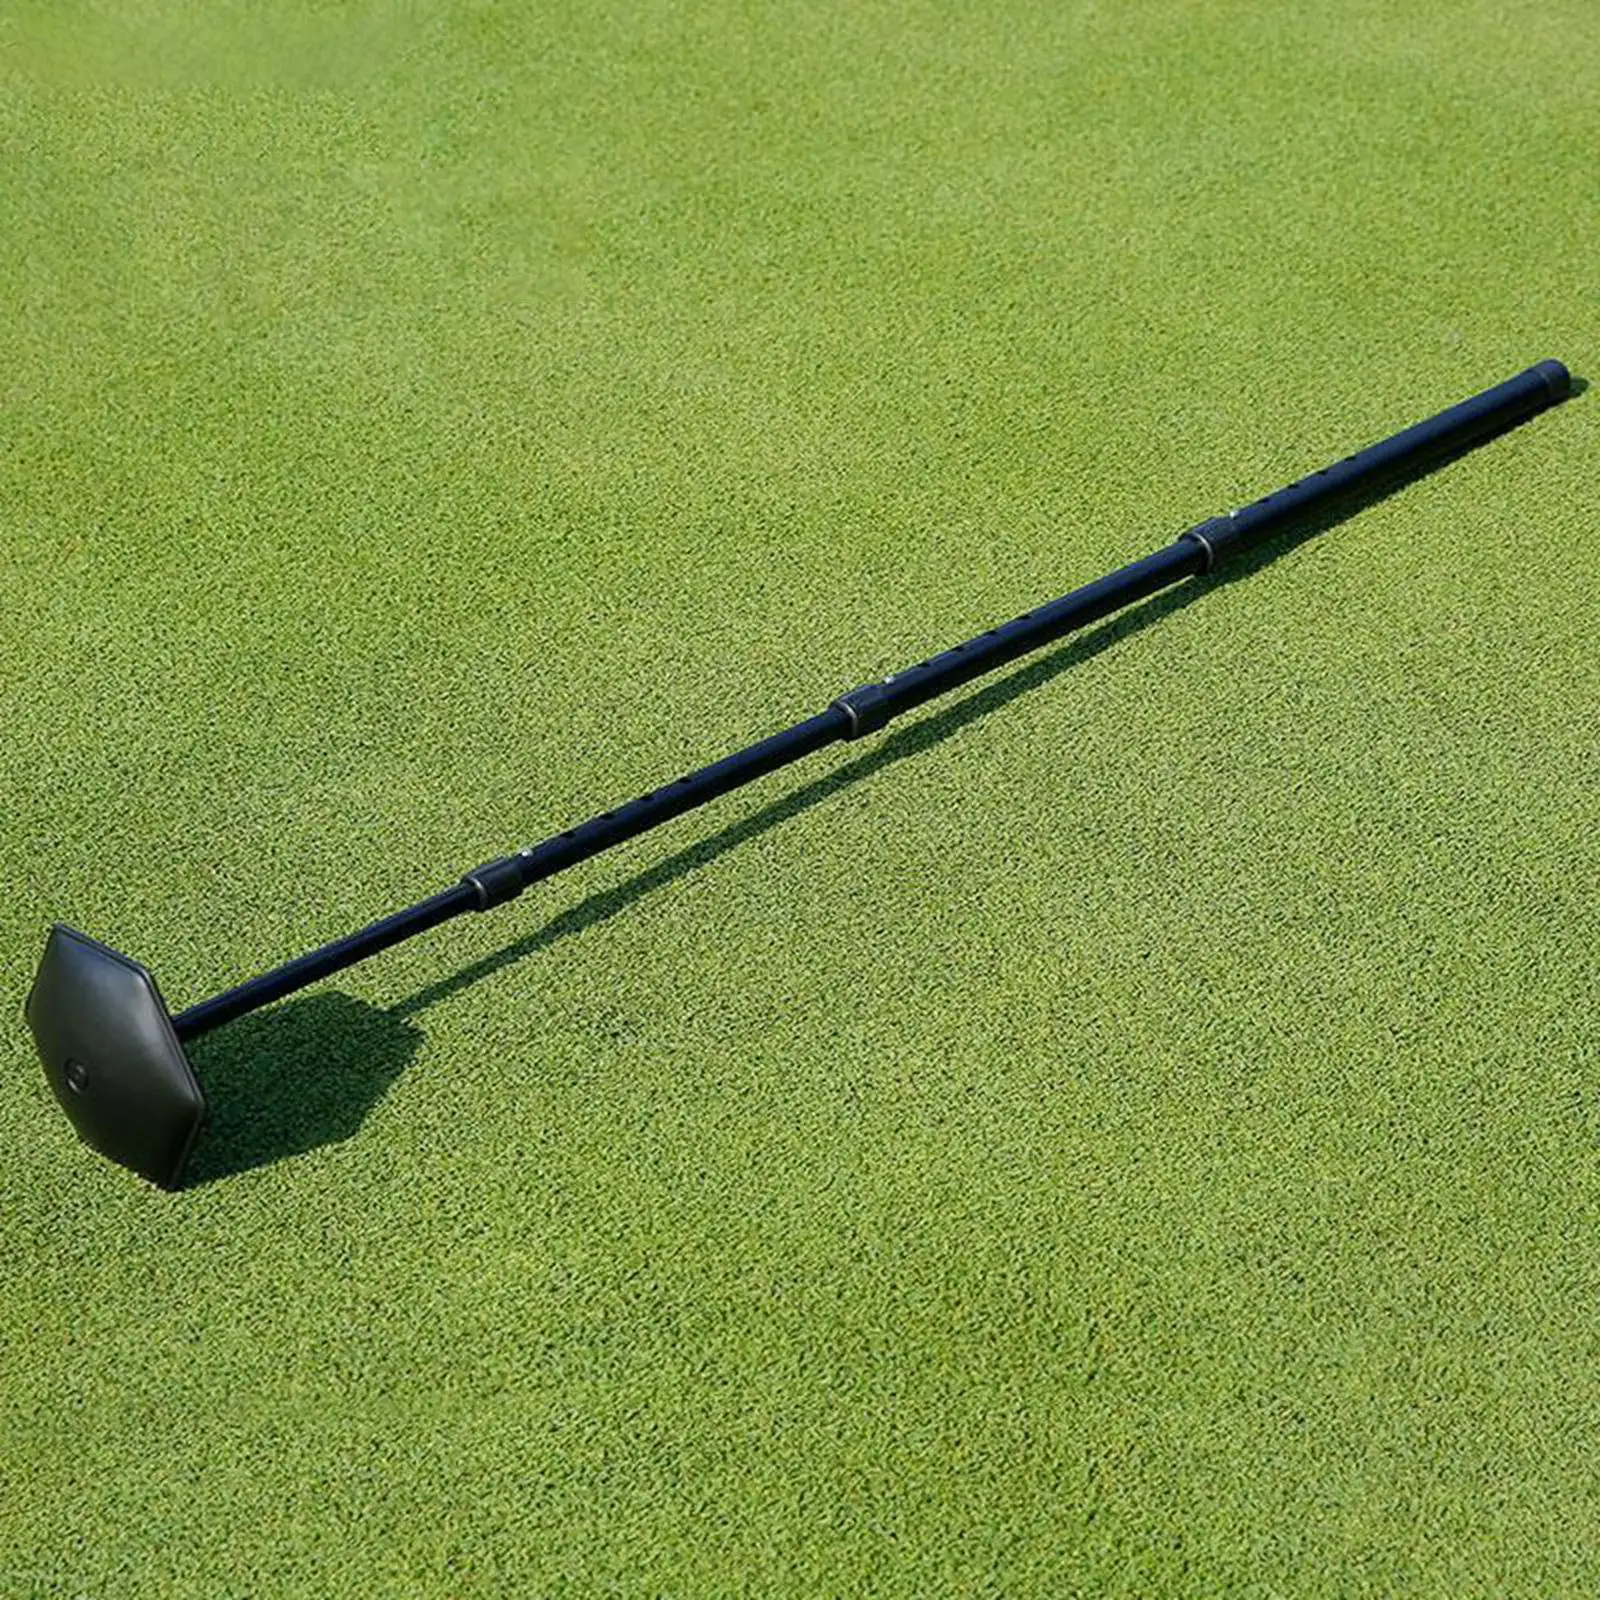 Telescoping Golf Club Stiff Arm Support System, Golf Travel Bag Support Rod, Golf Club Bag Case Support Bar, Gifts for Golfers